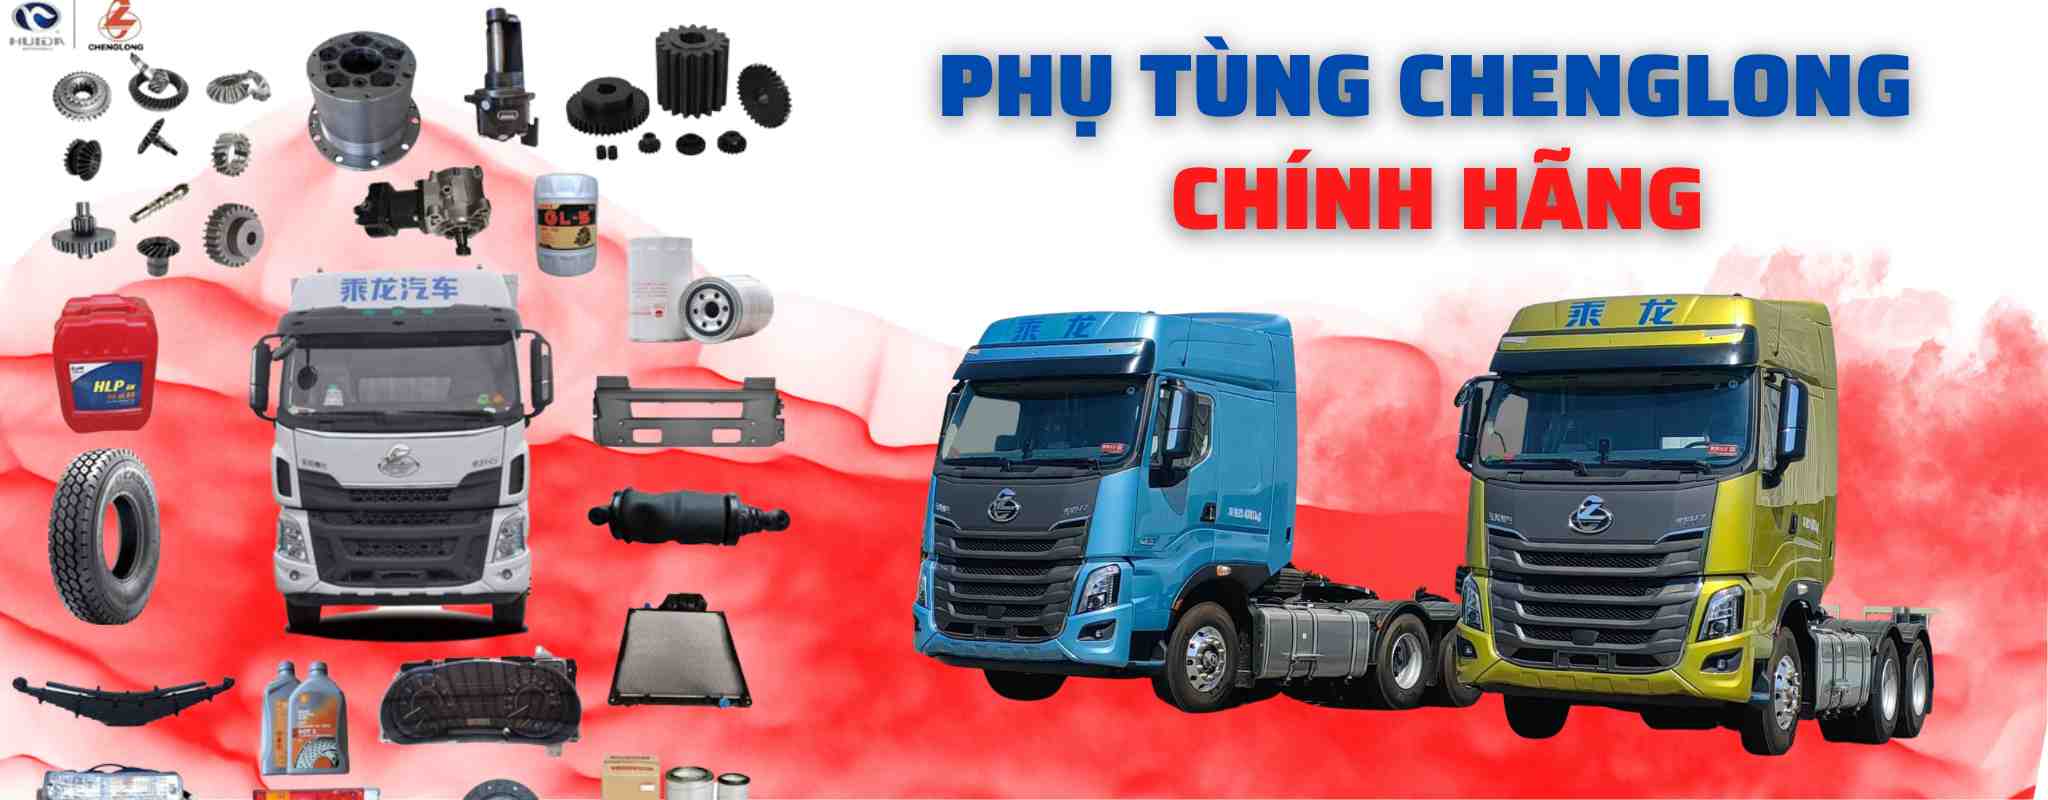 phu-tung-dau-keo-chenglong-h7-445-hp